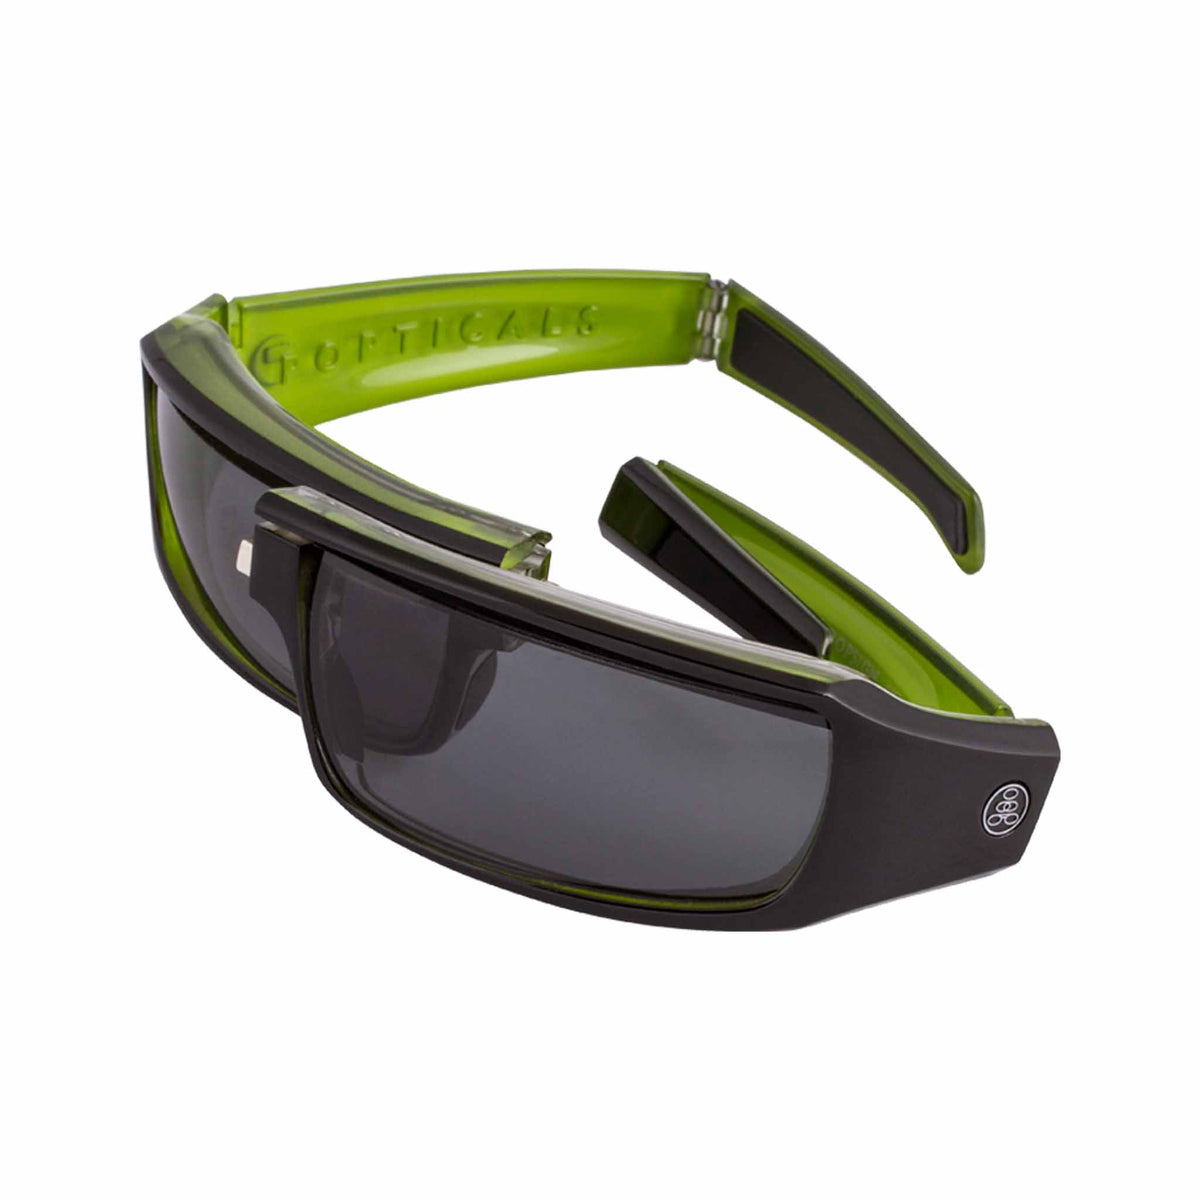 Popticals, Premium Compact Sunglasses, PopSign, 040020-GLGP, Polarized Sunglasses, Gloss Black over Green Crystal Frame, Gray Lenses, Spider View